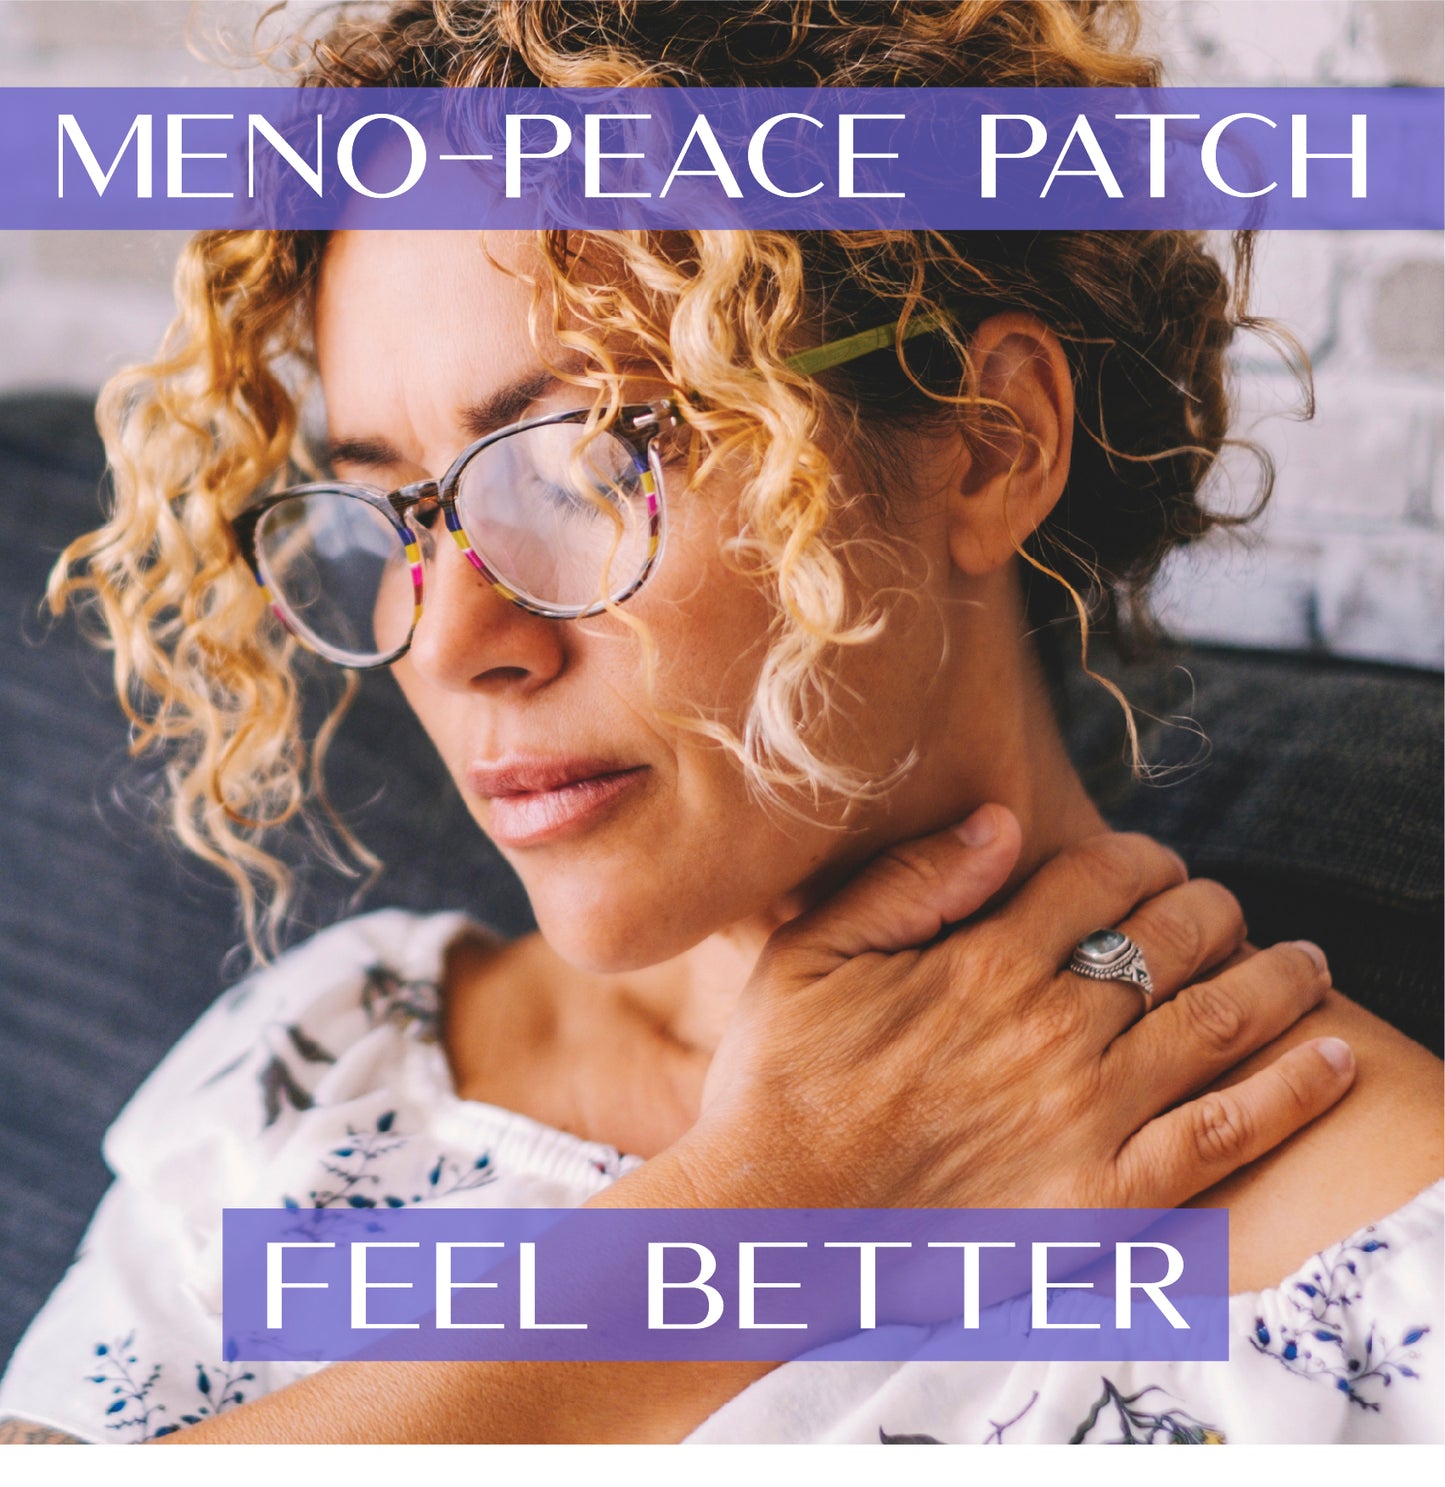 Meno-Peace Patch - Laki Naturals